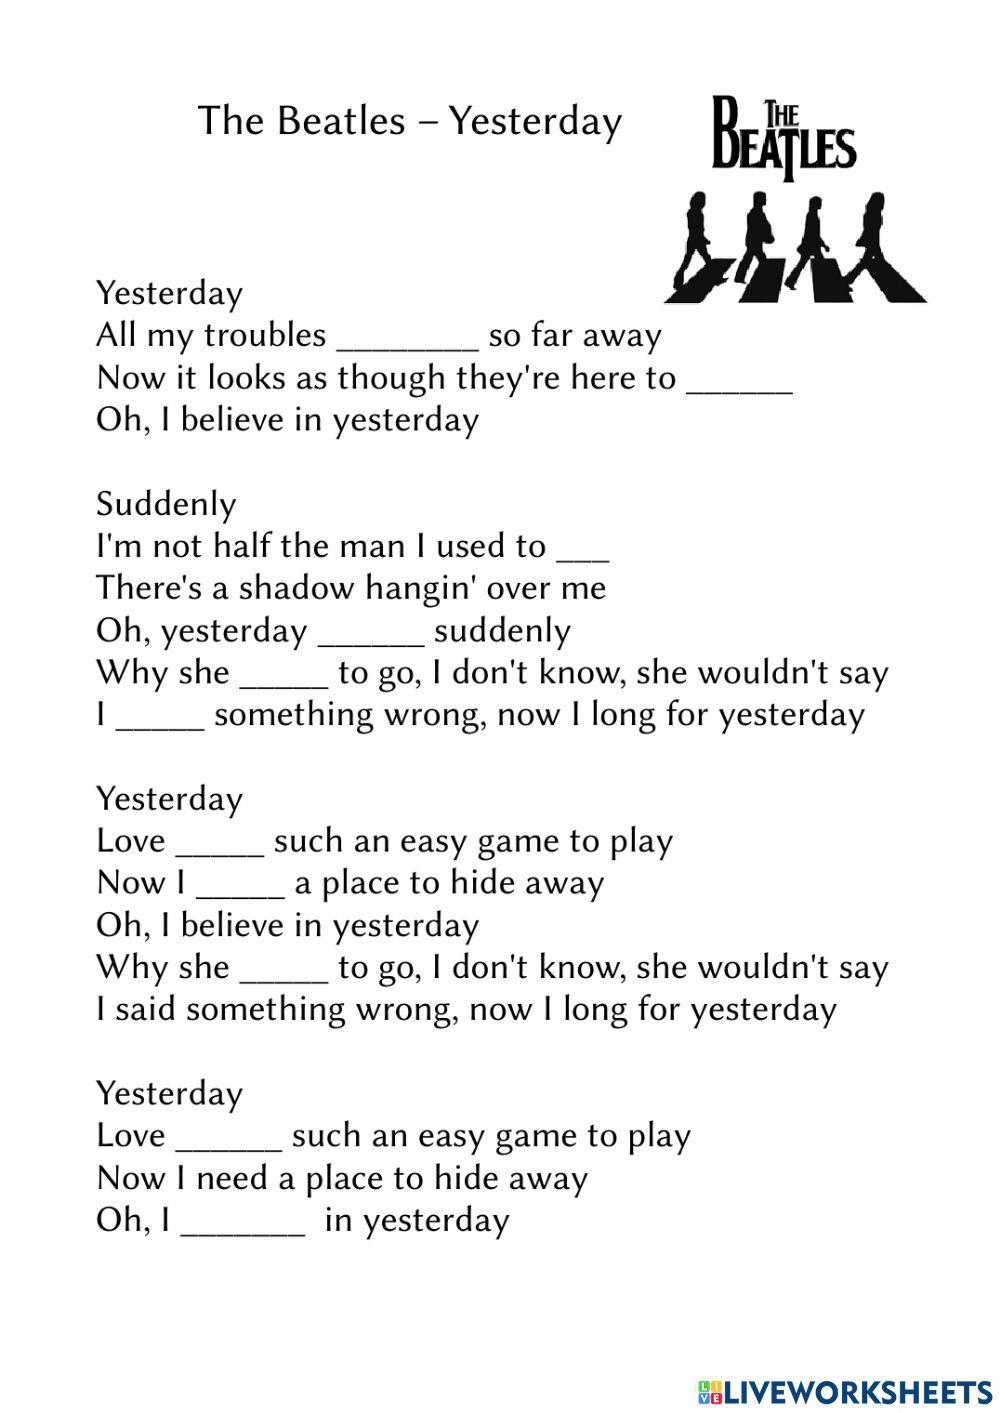 The Beatles - Yesterday - lyrics - verbs